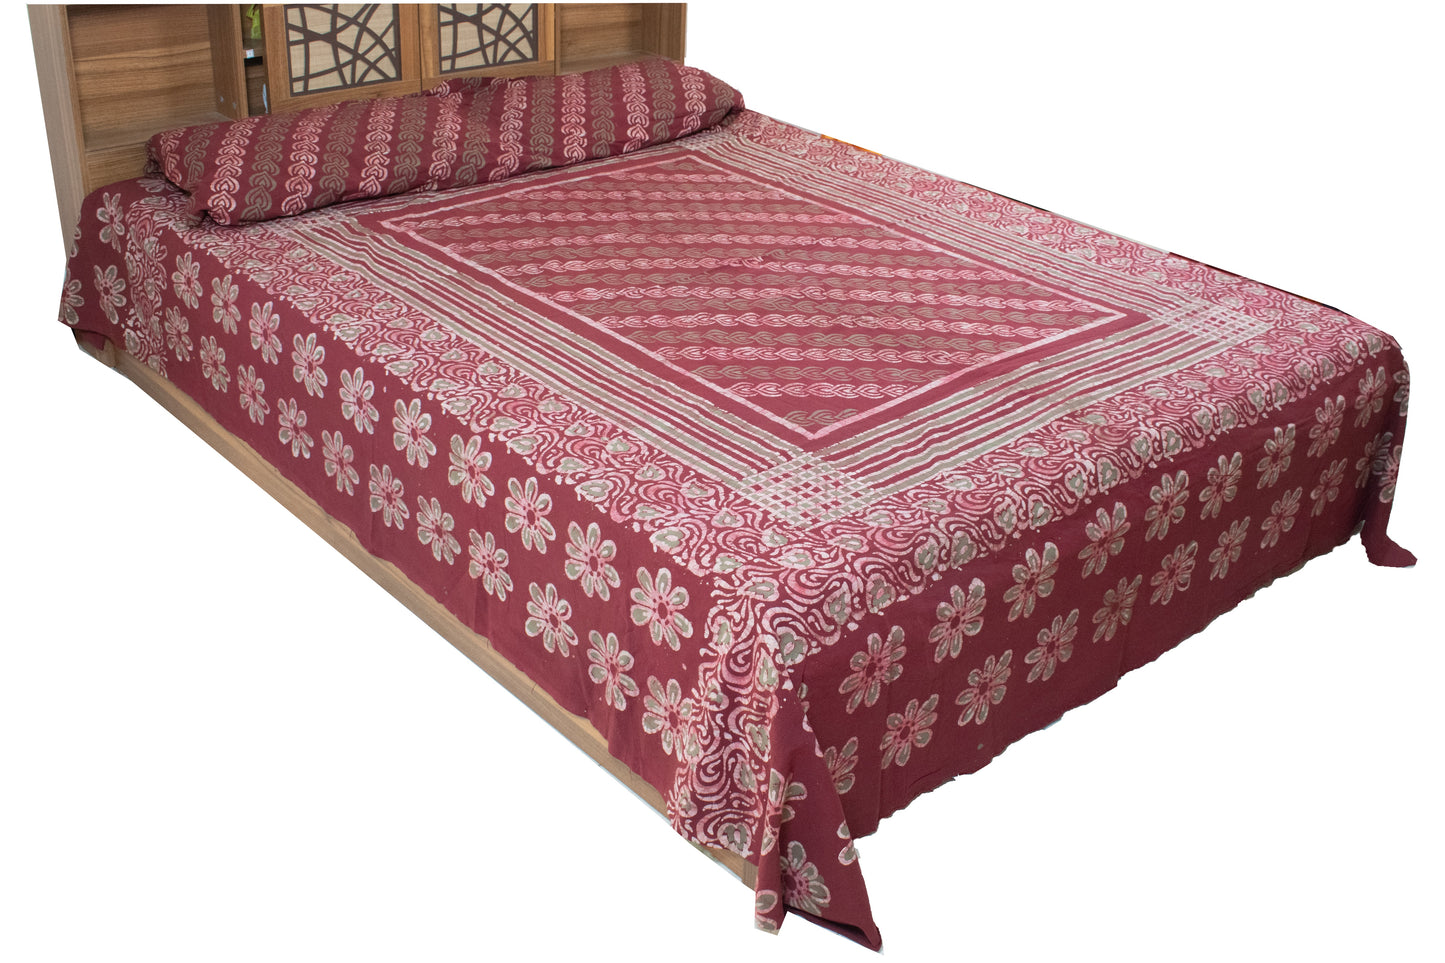 Wax Batik Cotton Hand Printed Bedsheet - Double    -  SKU: AA06C01D